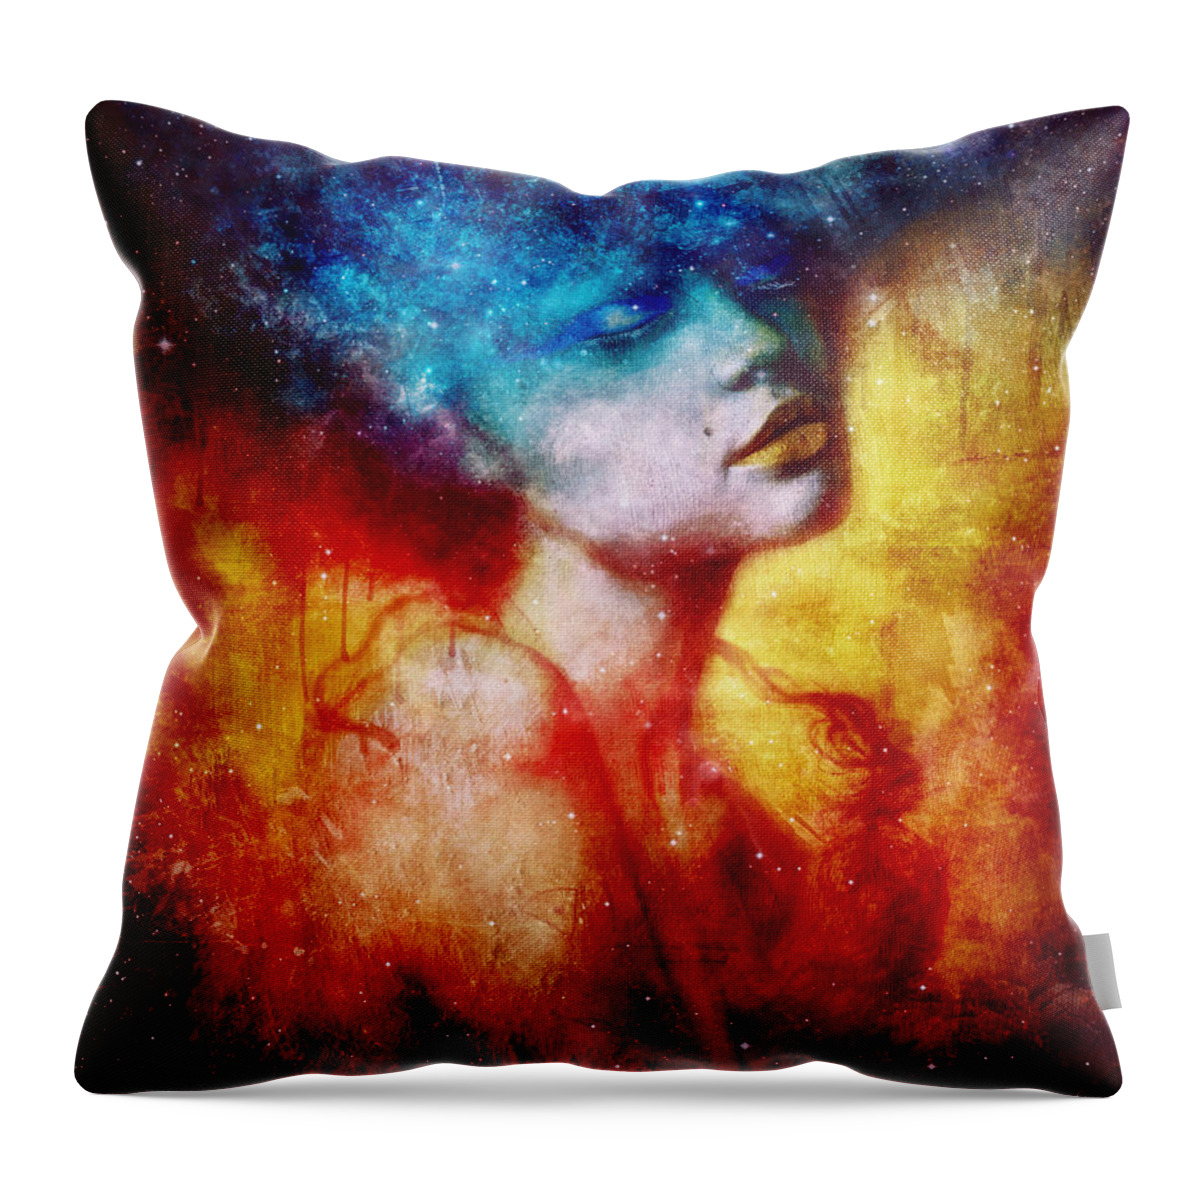 Surreal Throw Pillow featuring the digital art Revelation by Mario Sanchez Nevado